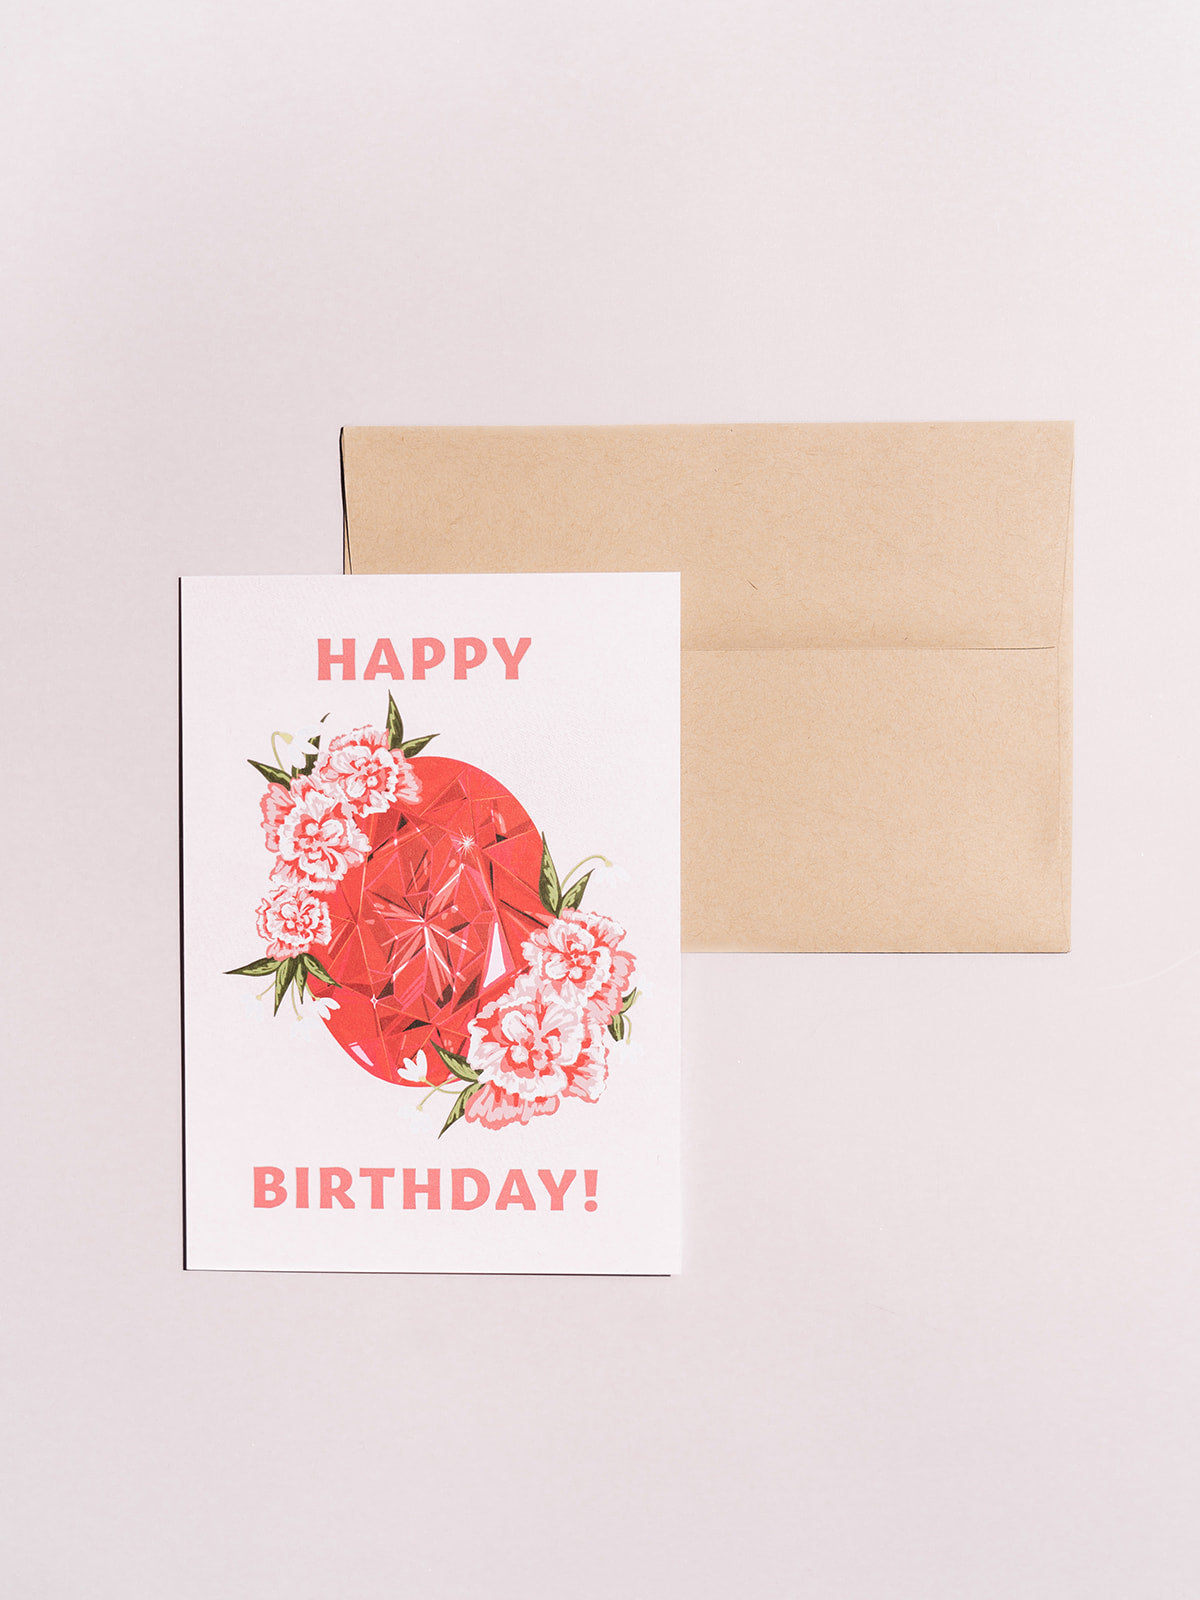 january garnet birthstone gemstone birthday card with kraft envelope